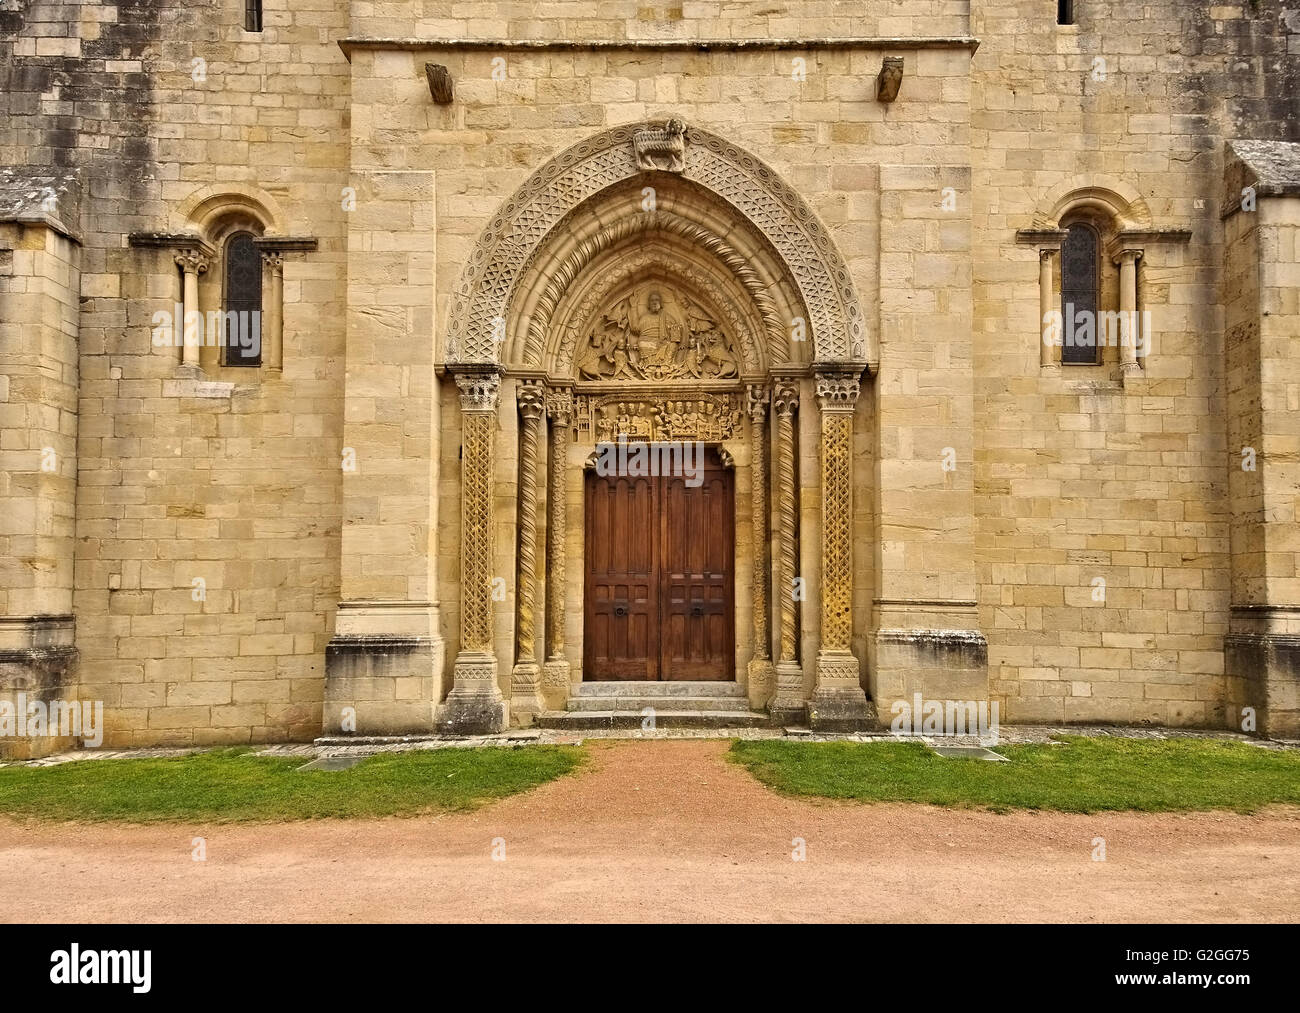 Romanische Kirche in Semur-en-Brionnais Burgund, Frankreich - romanica Semur-en-Brionnais chiesa in Borgogna, Francia Foto Stock